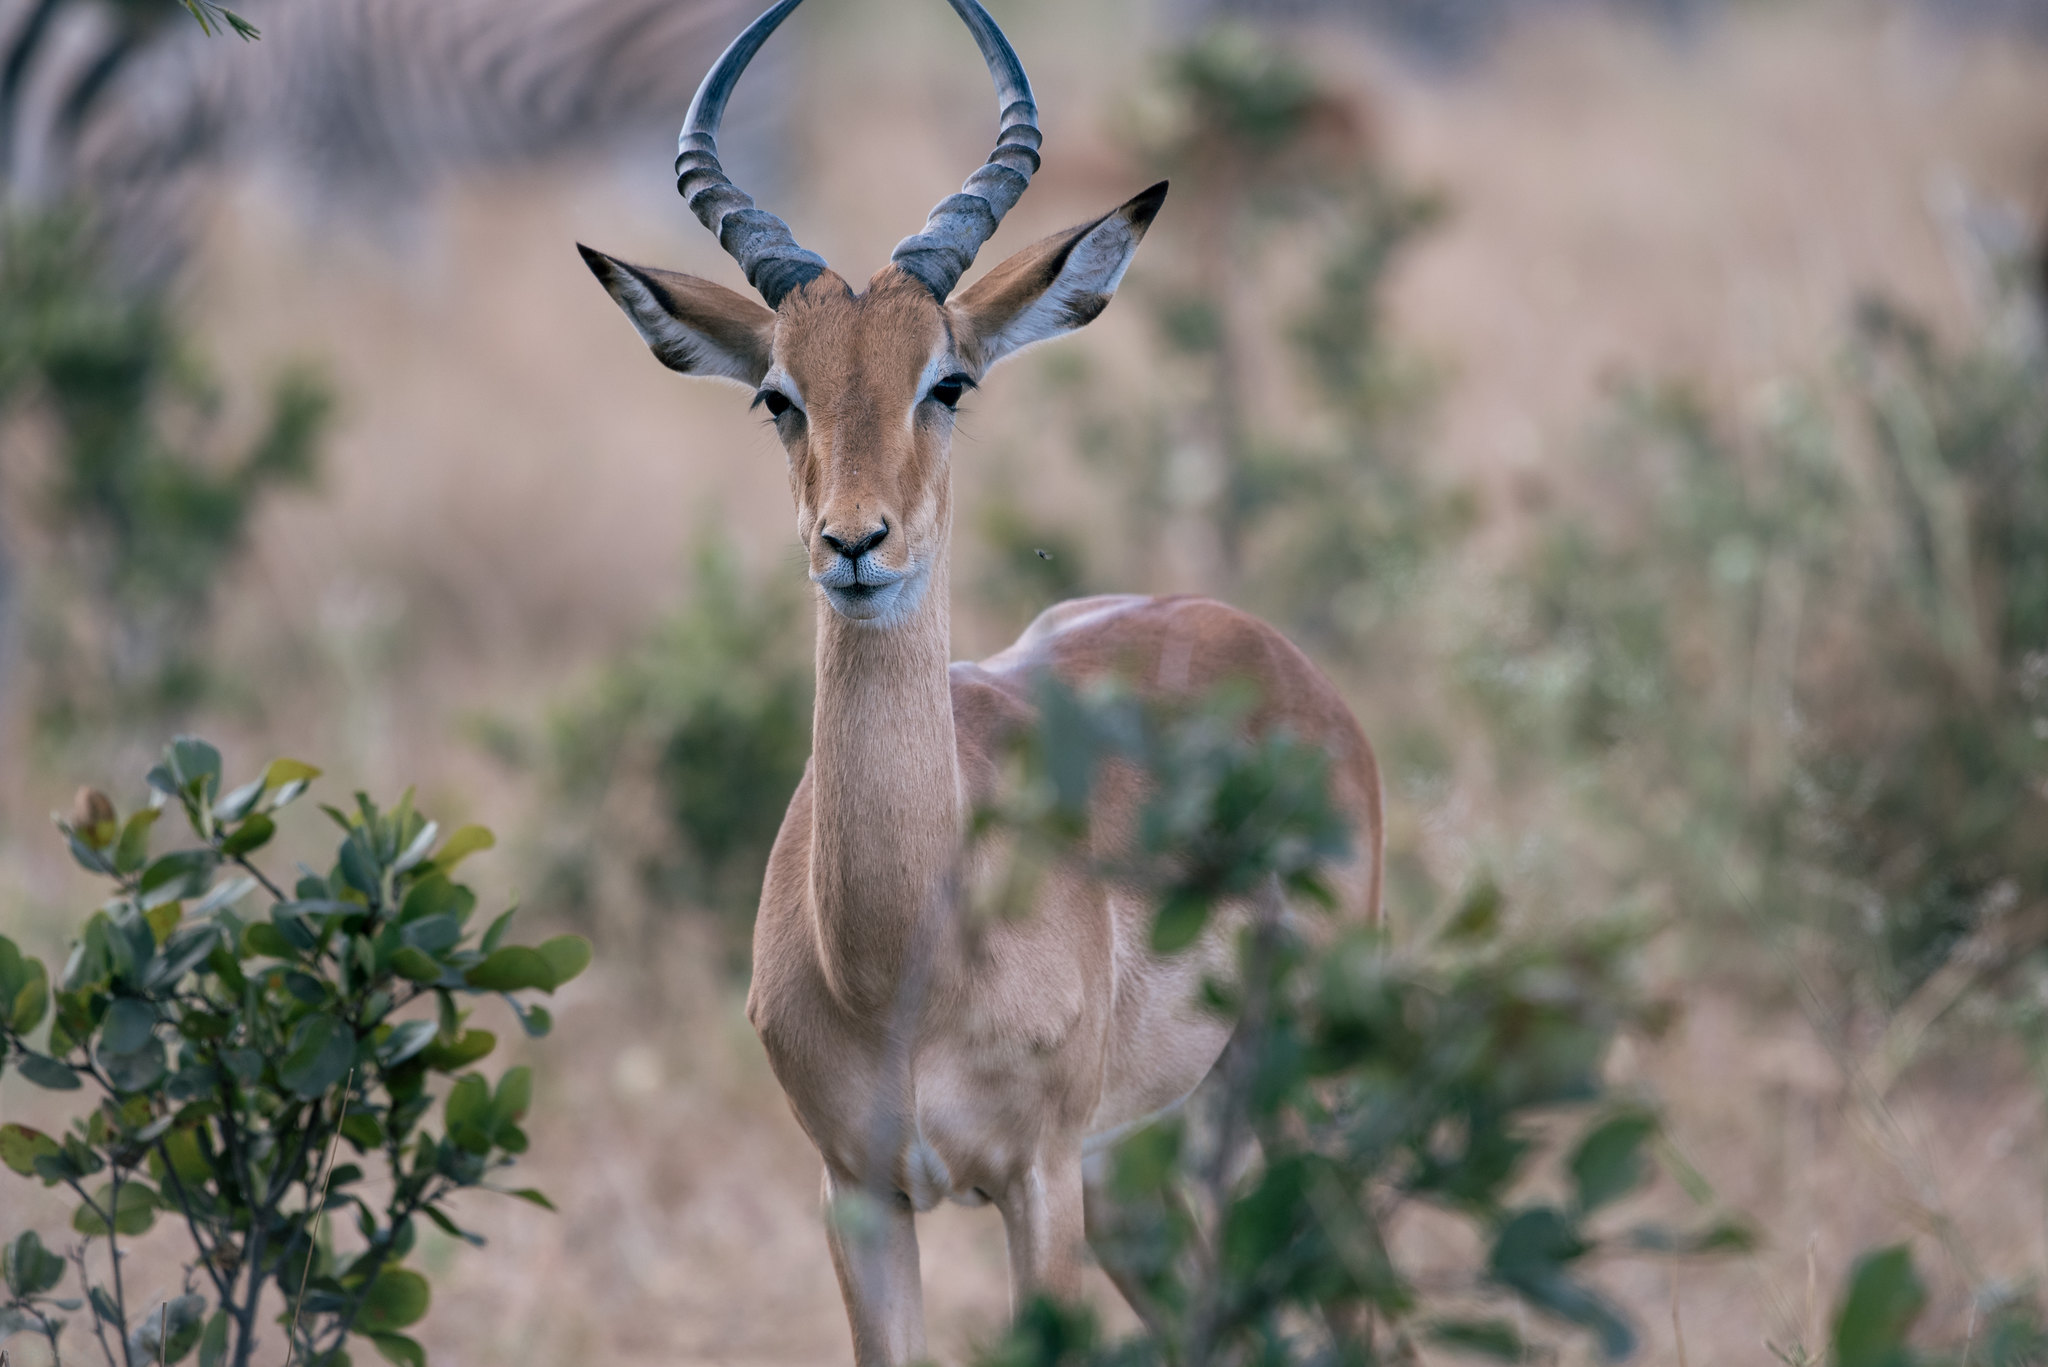 Munching impala